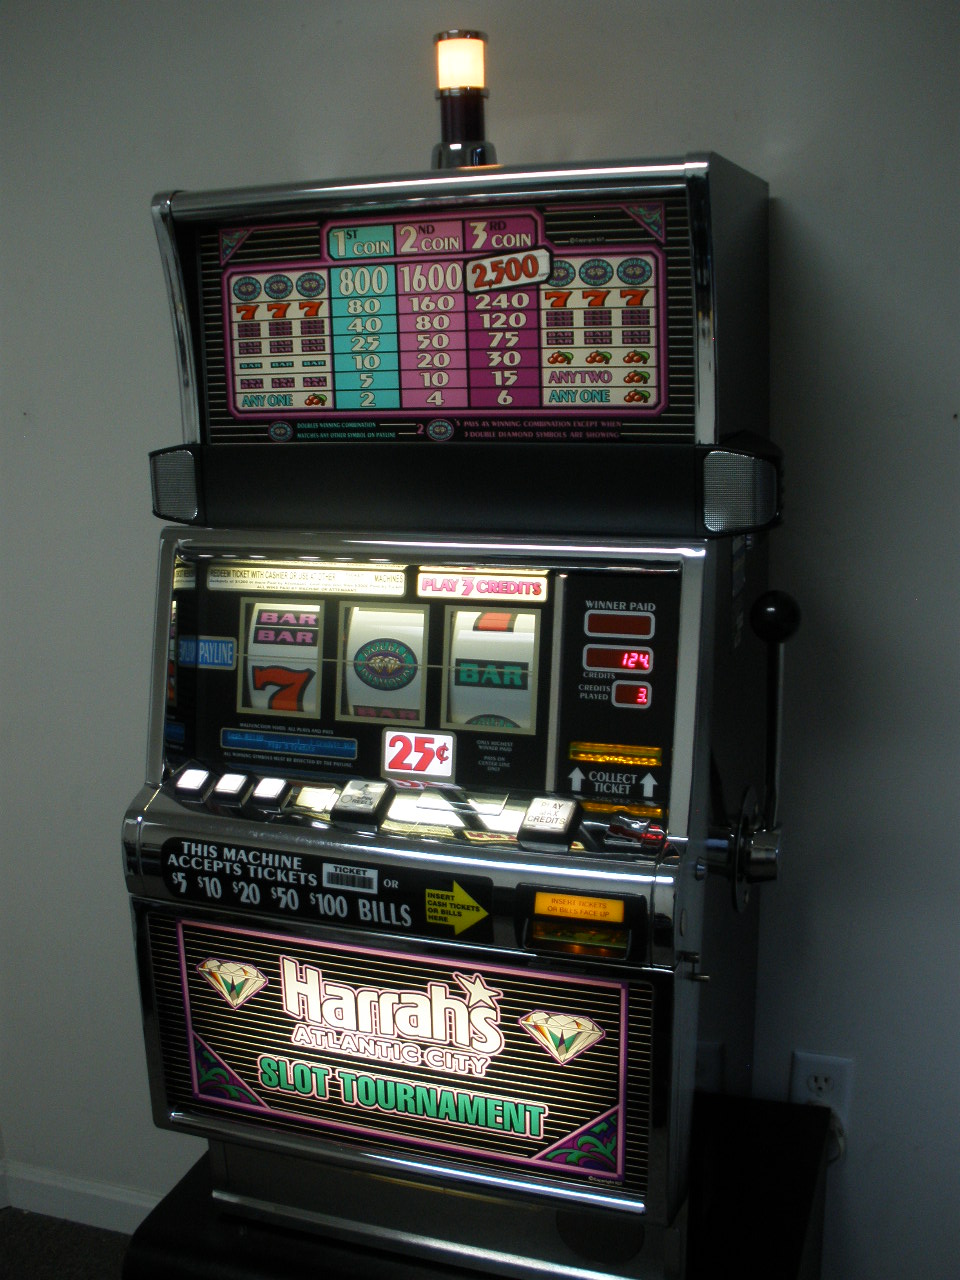 Shanghai Respin Slot Machine